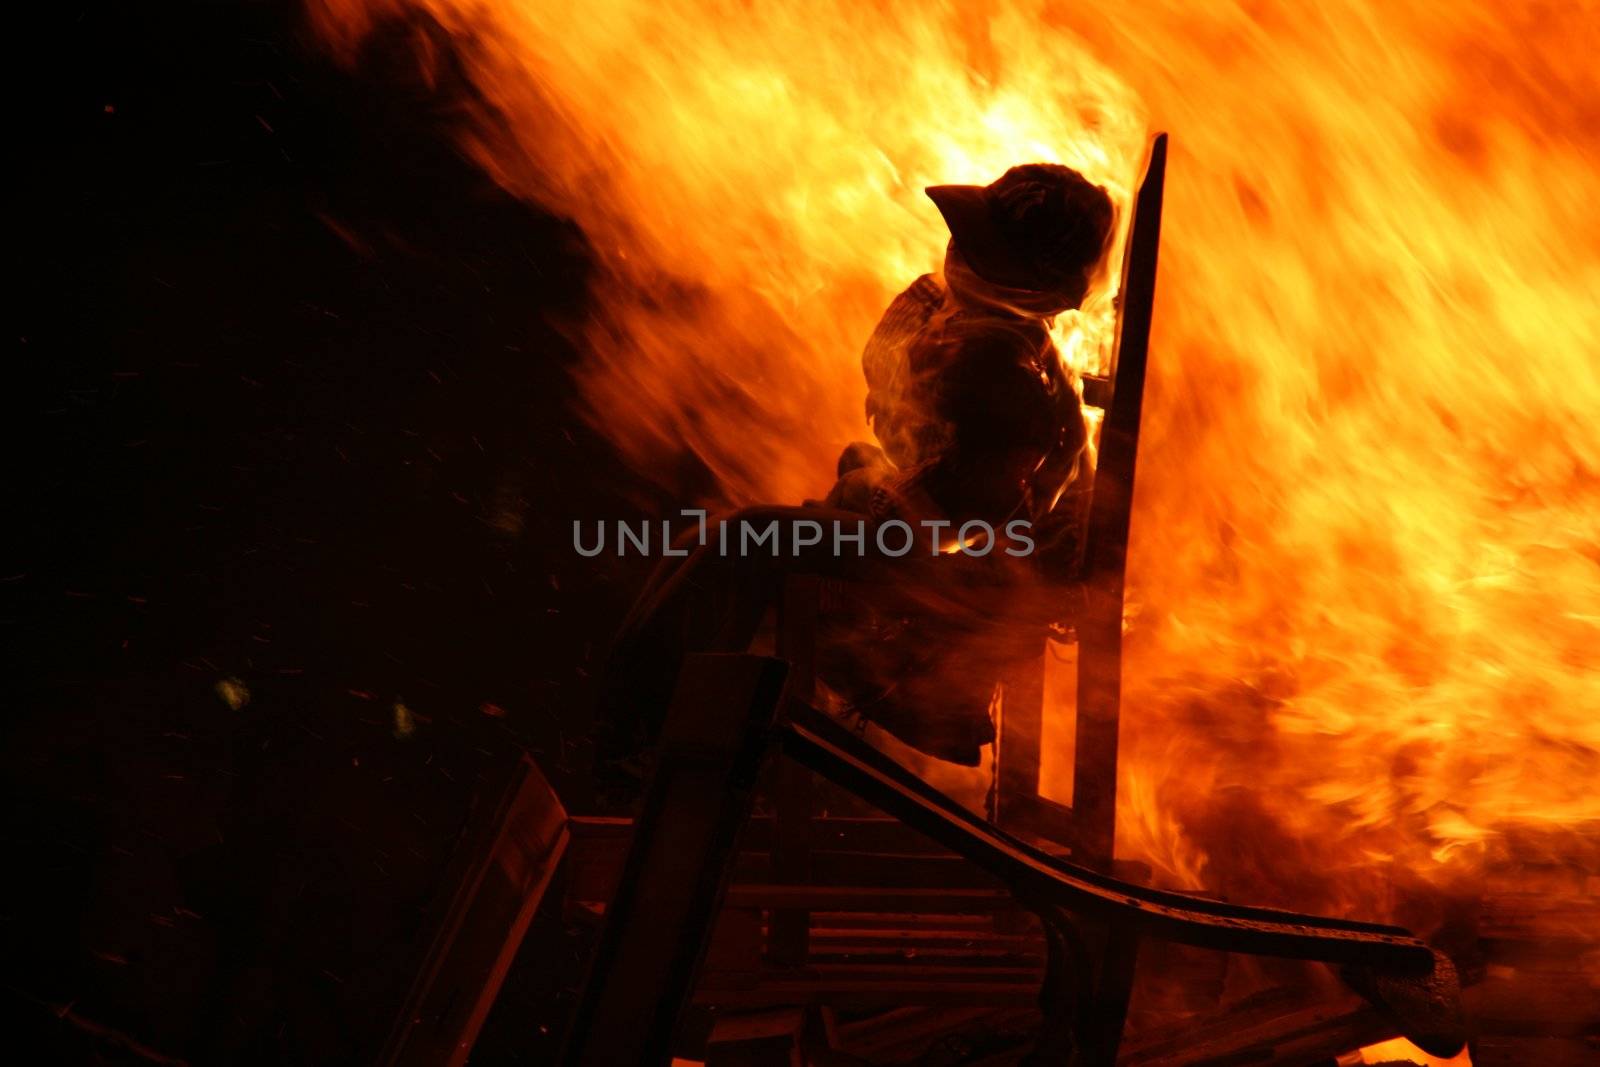 scenery of a burning man, celebration of st joan